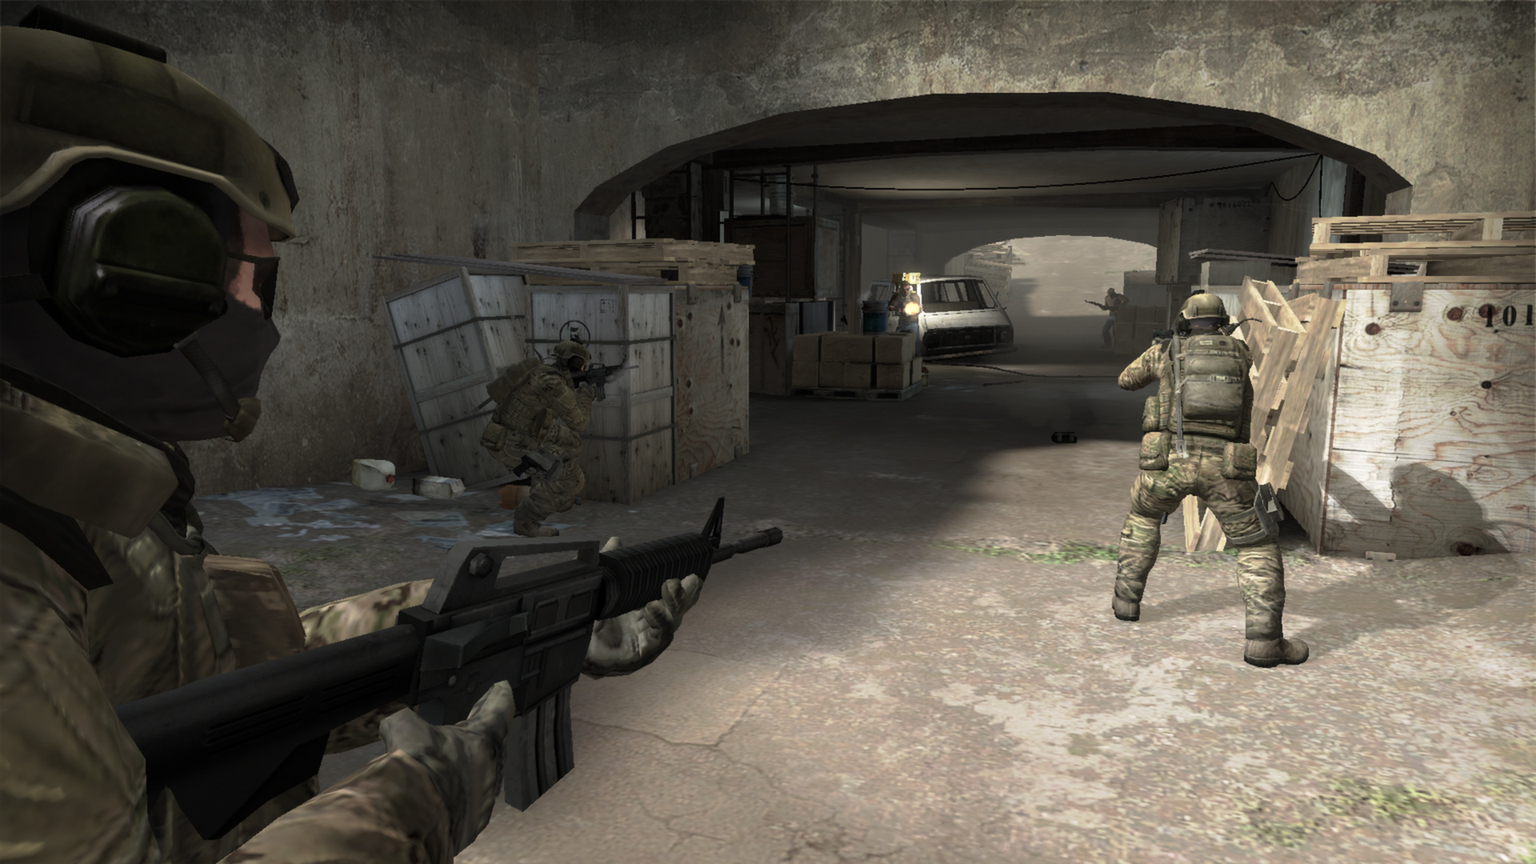 Counter-Strike: Global Offensive en Steam